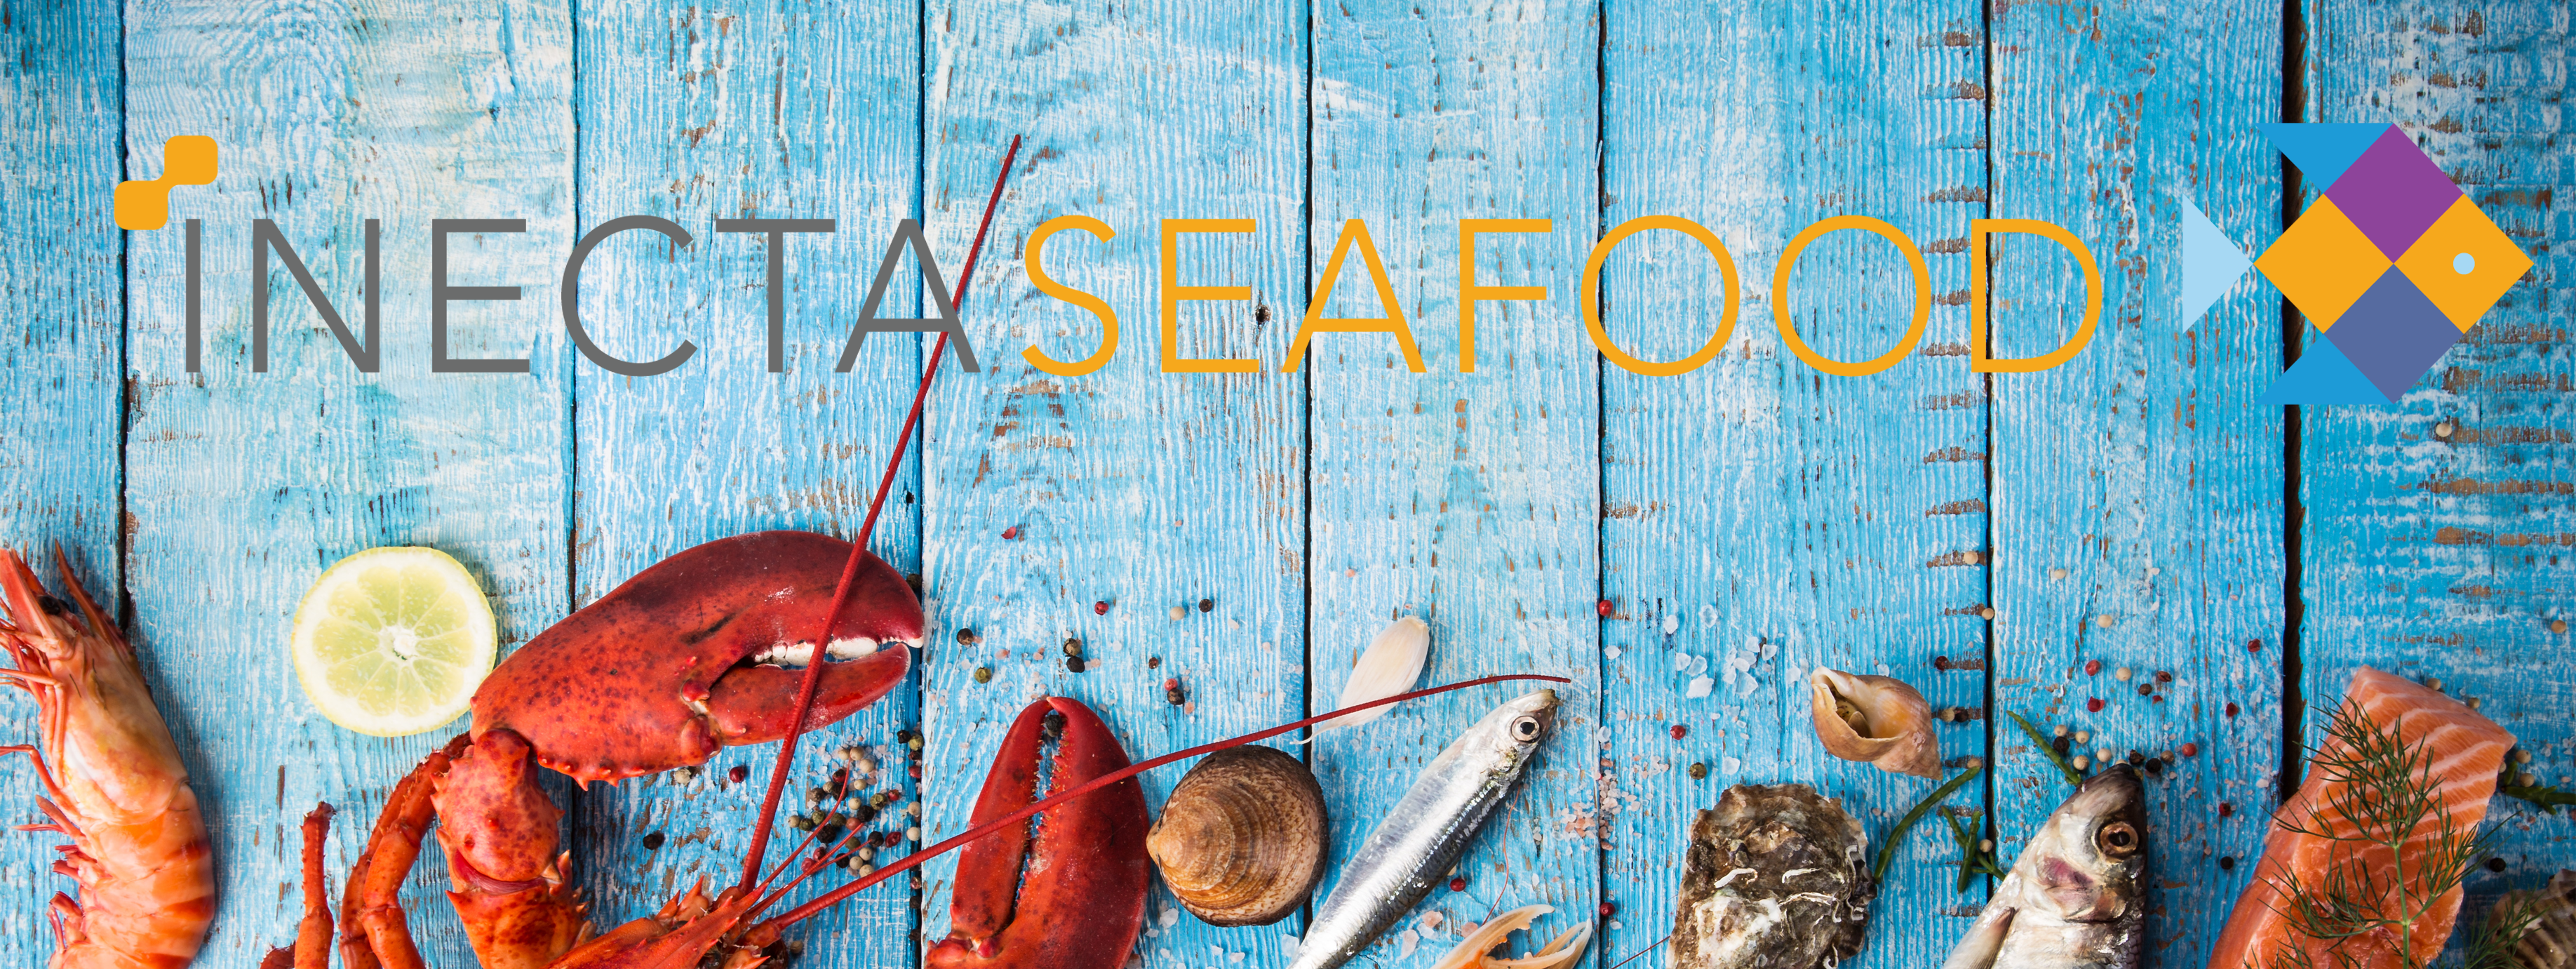 seafood fundamentals